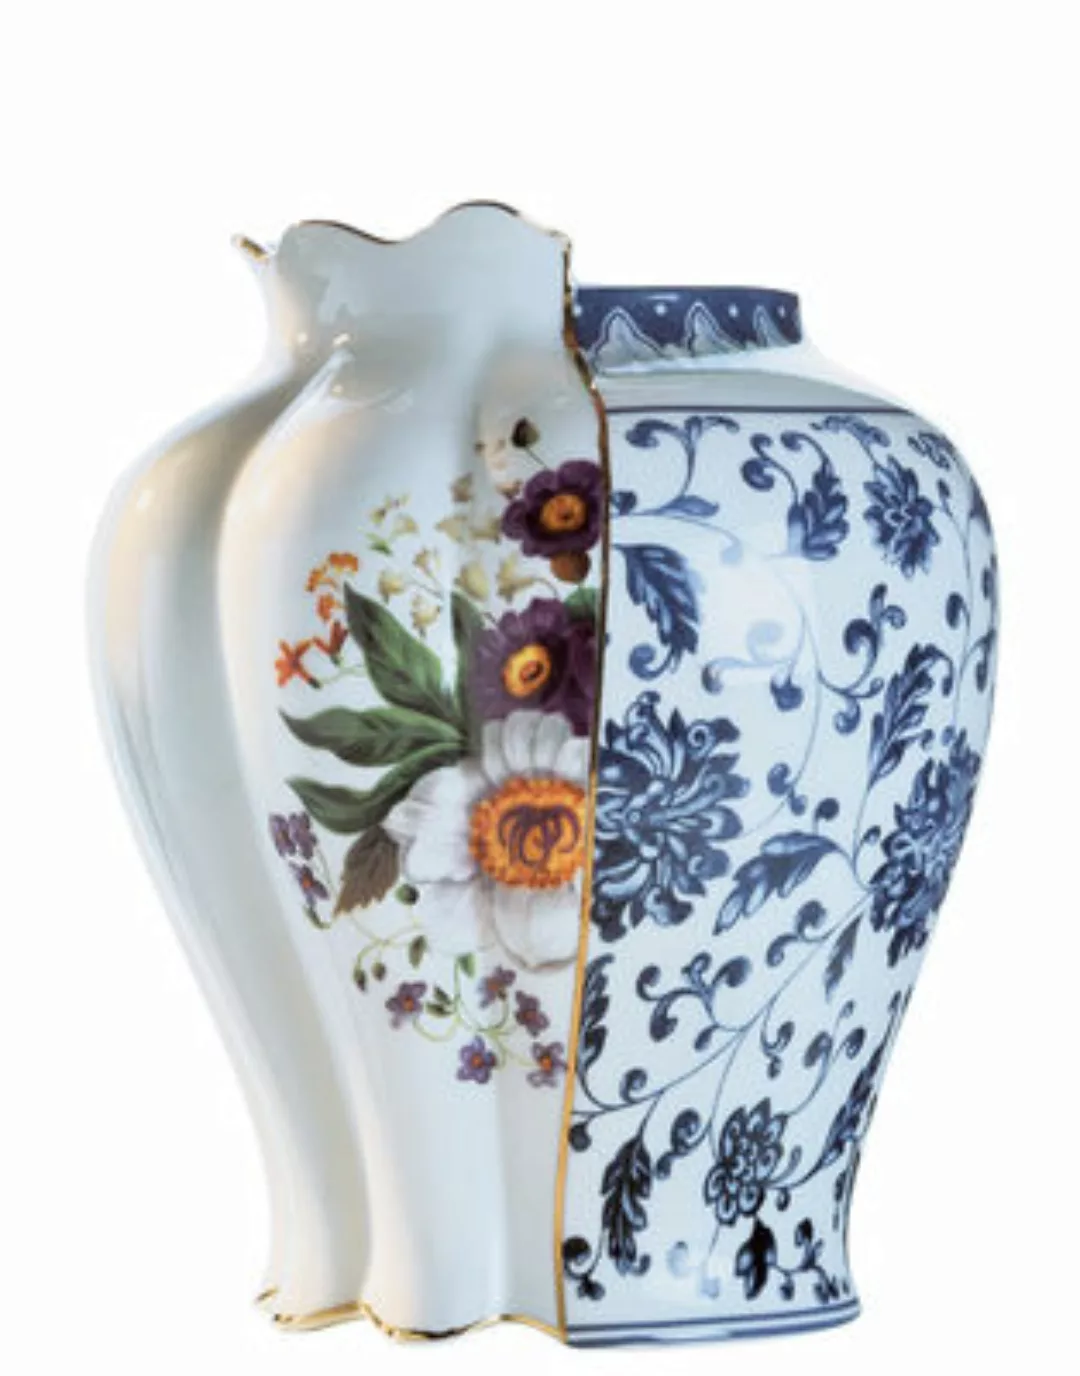 Vase Hybrid - Melania keramik bunt - Seletti - Bunt günstig online kaufen